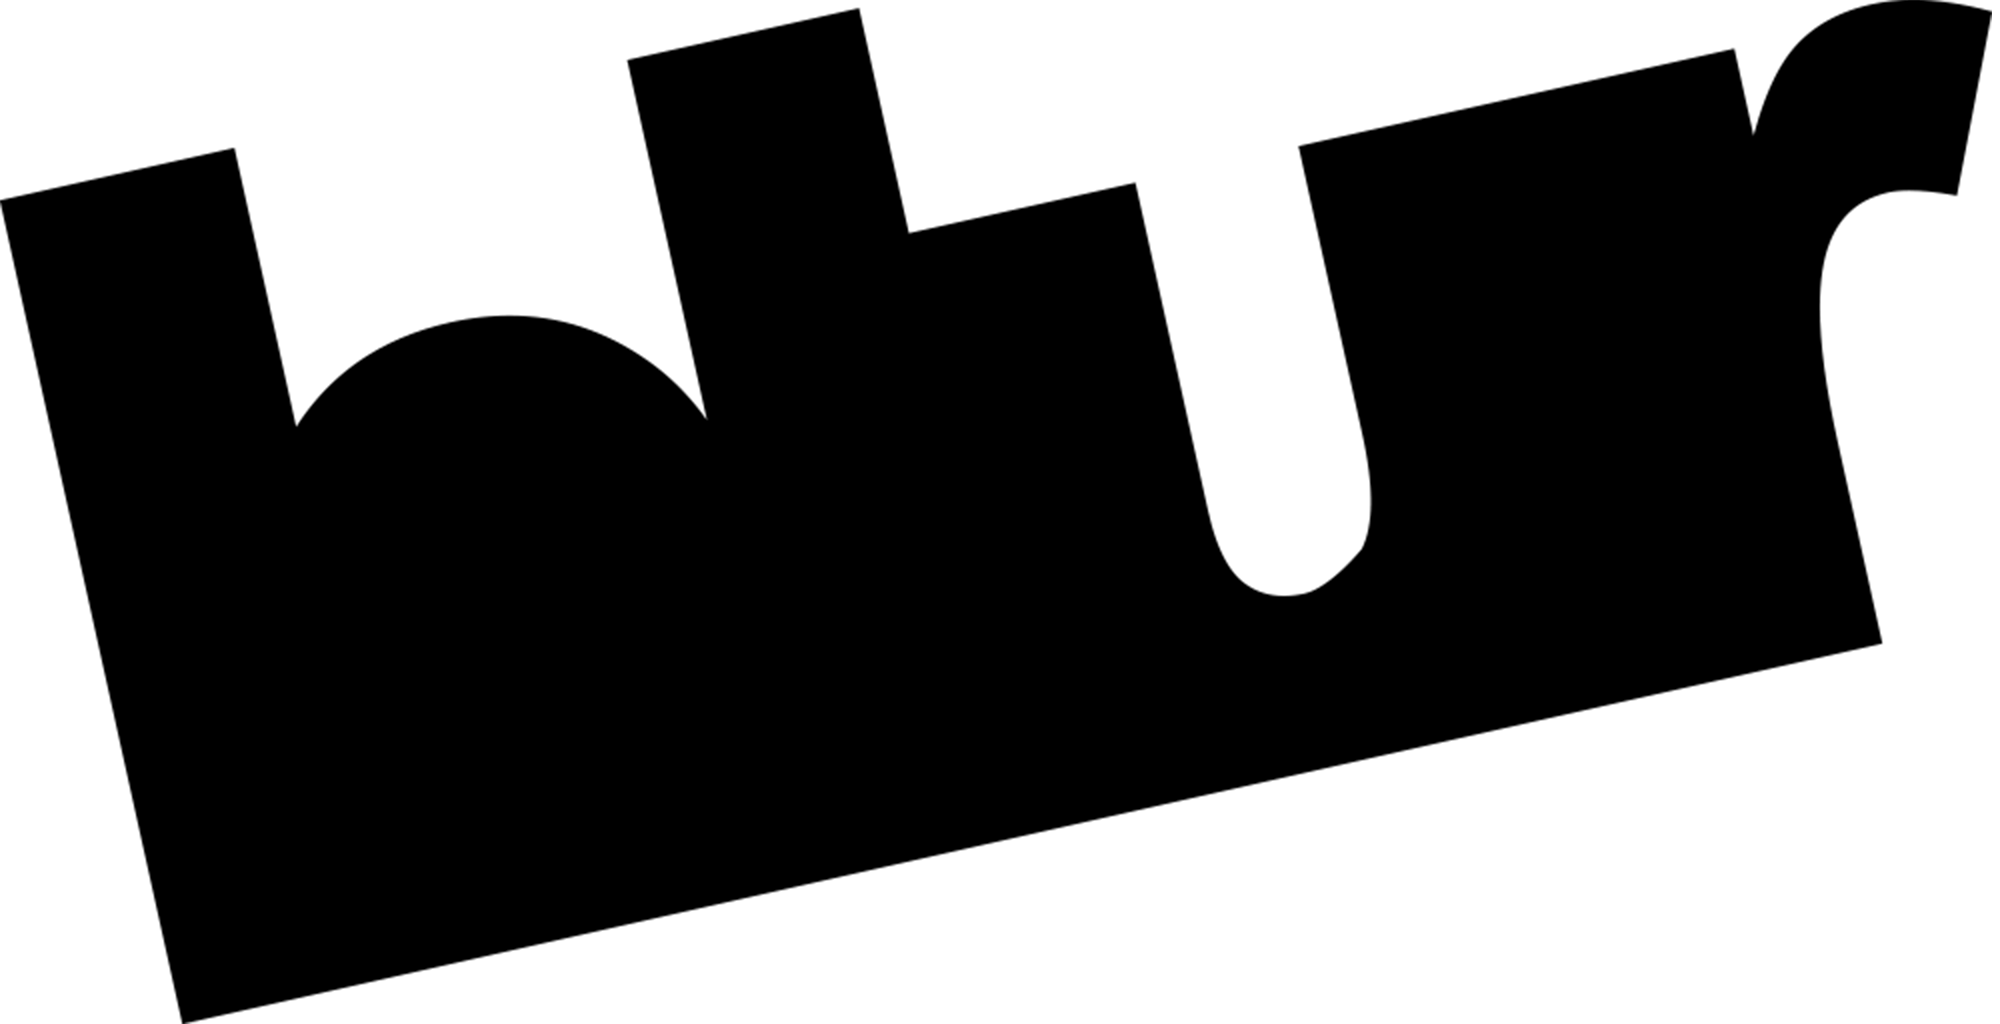  Best Technology Public Relations Firm Logo: Blur Group